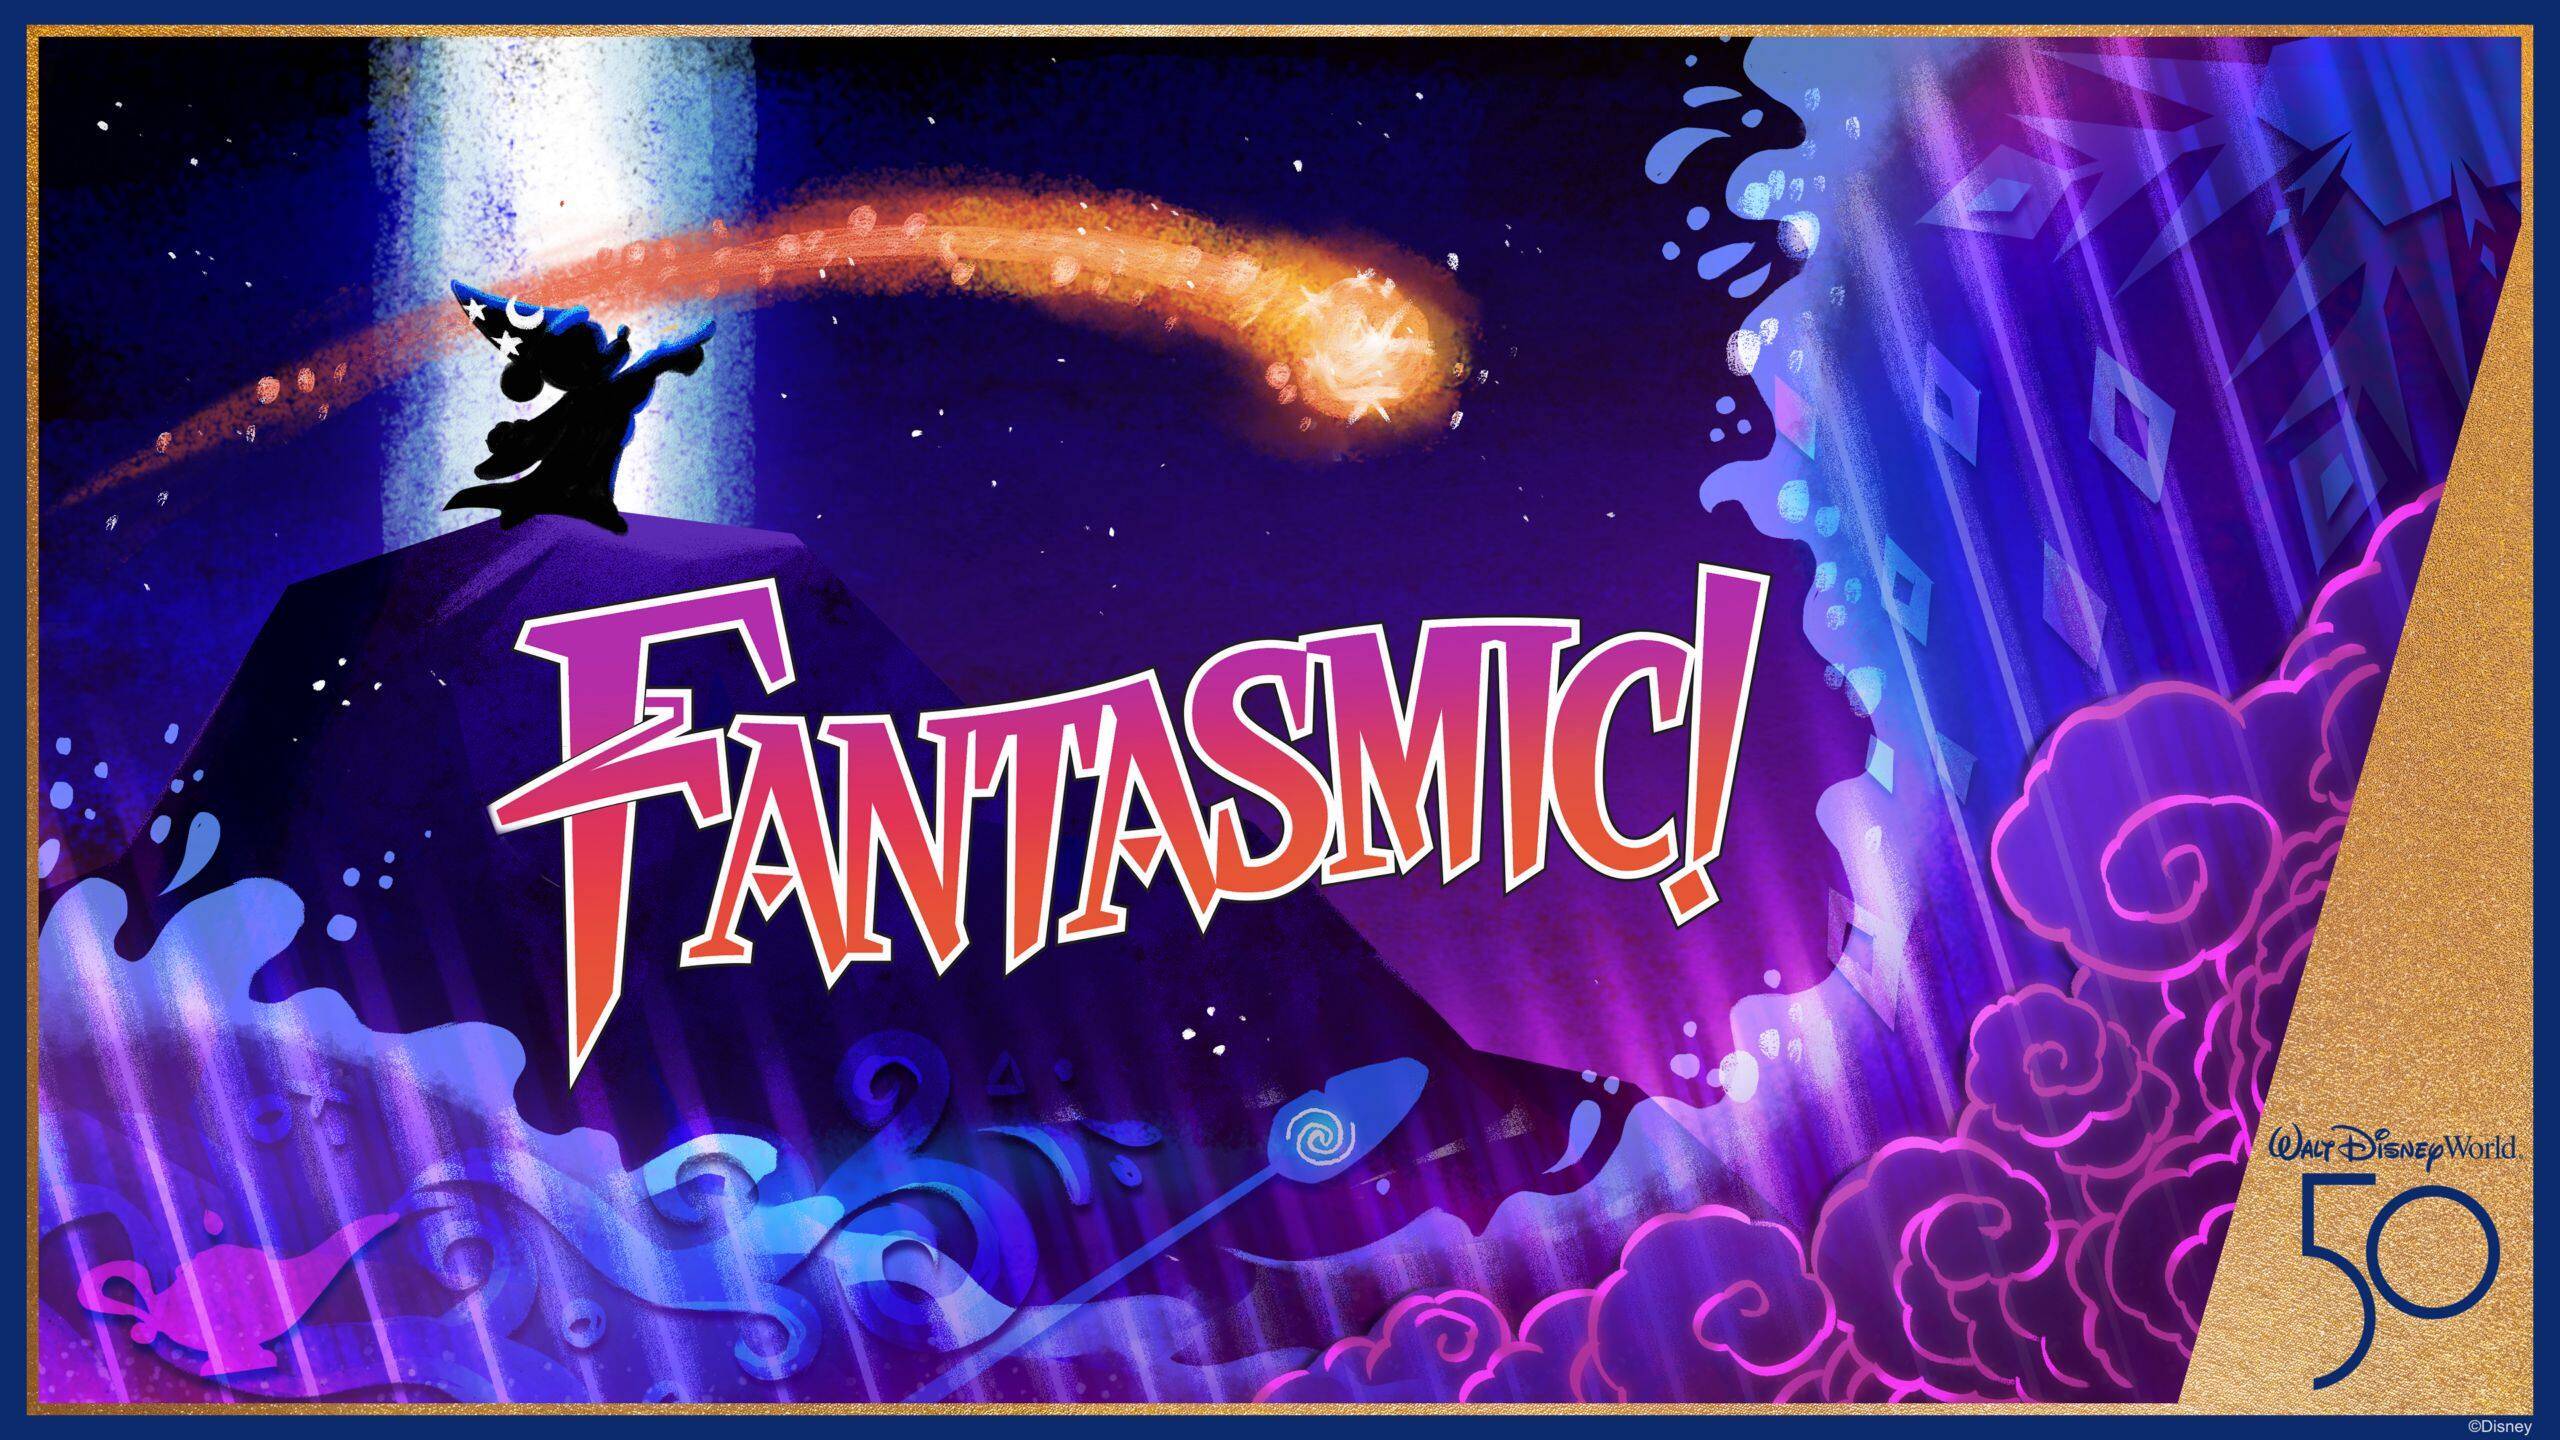 Full details on Fantasmic! dining packages for Walt Disney World